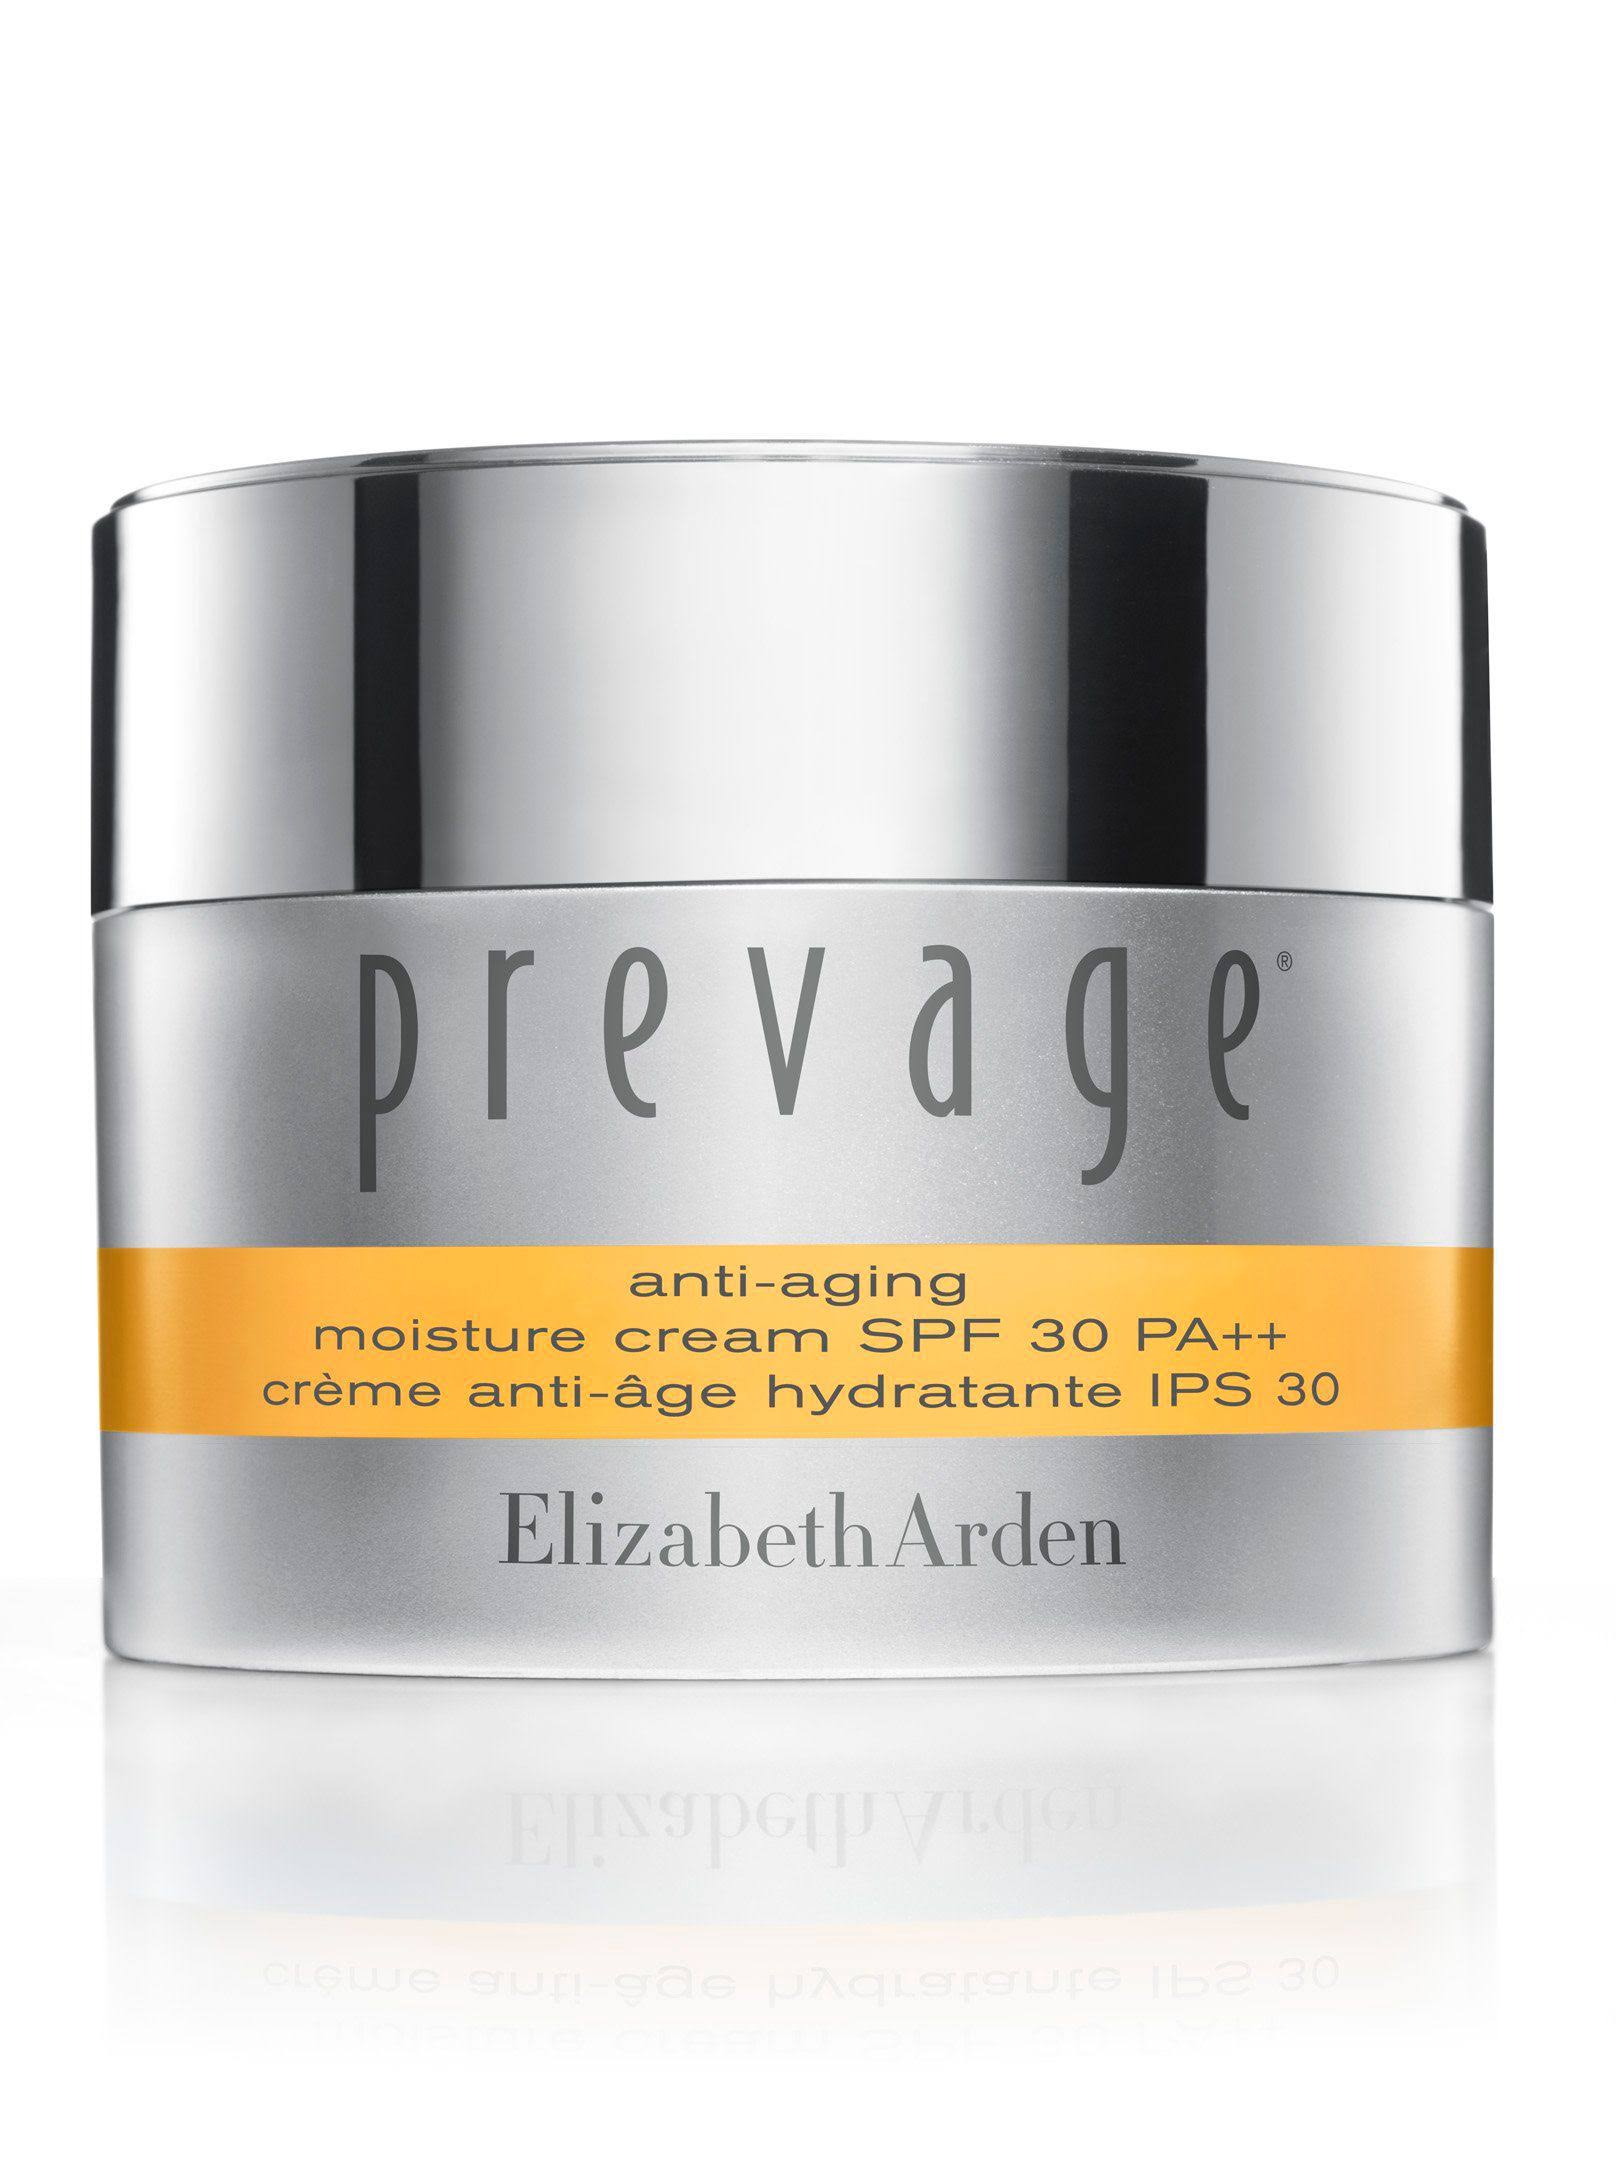 Prevage Anti-Aging Moisture Cream SPF30 50ml - Elizabeth Arden